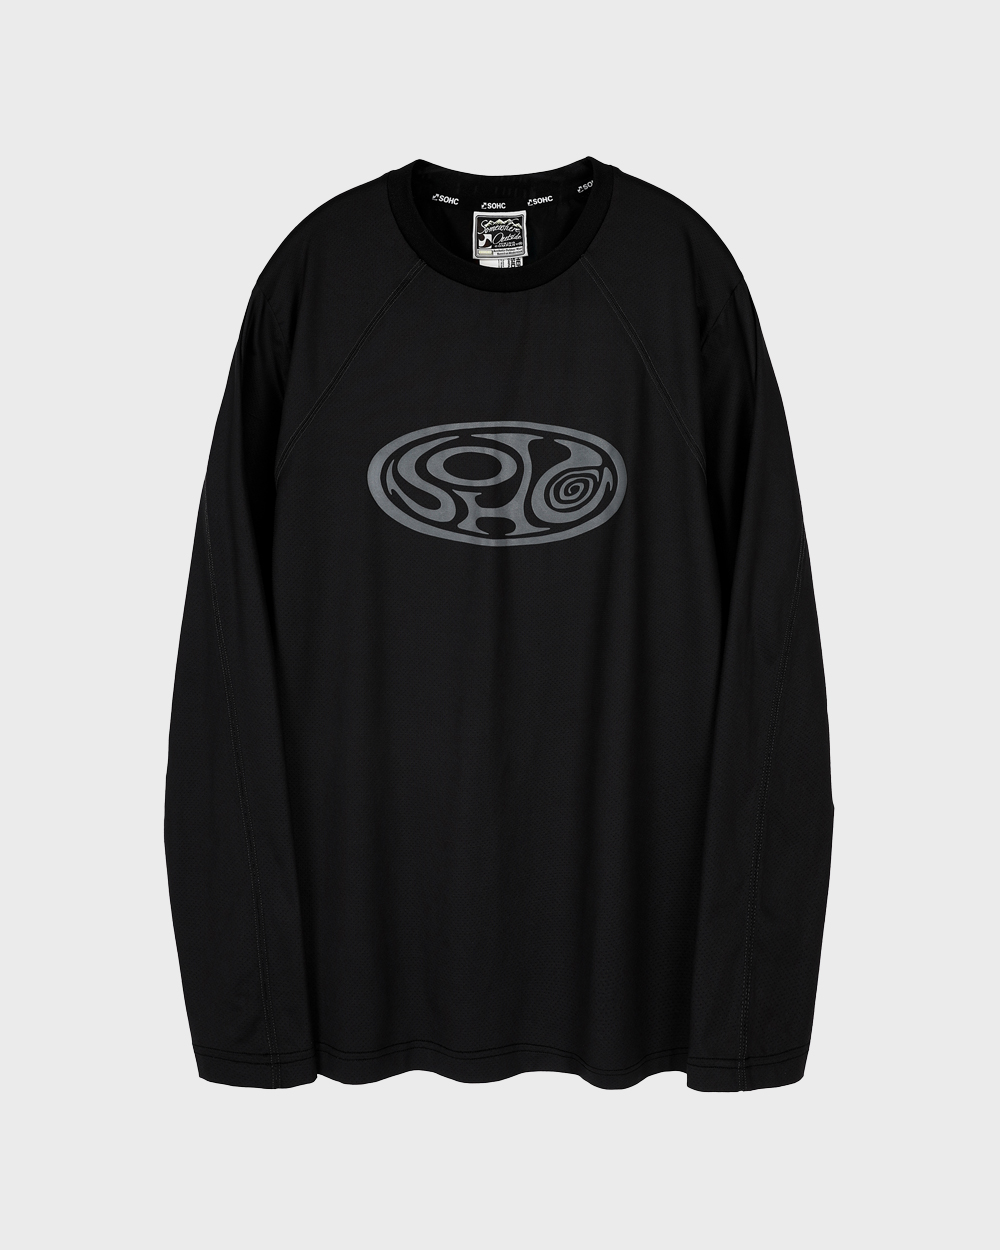 Hatching Egg SOHC Reflective Print T-Shirt (Black)